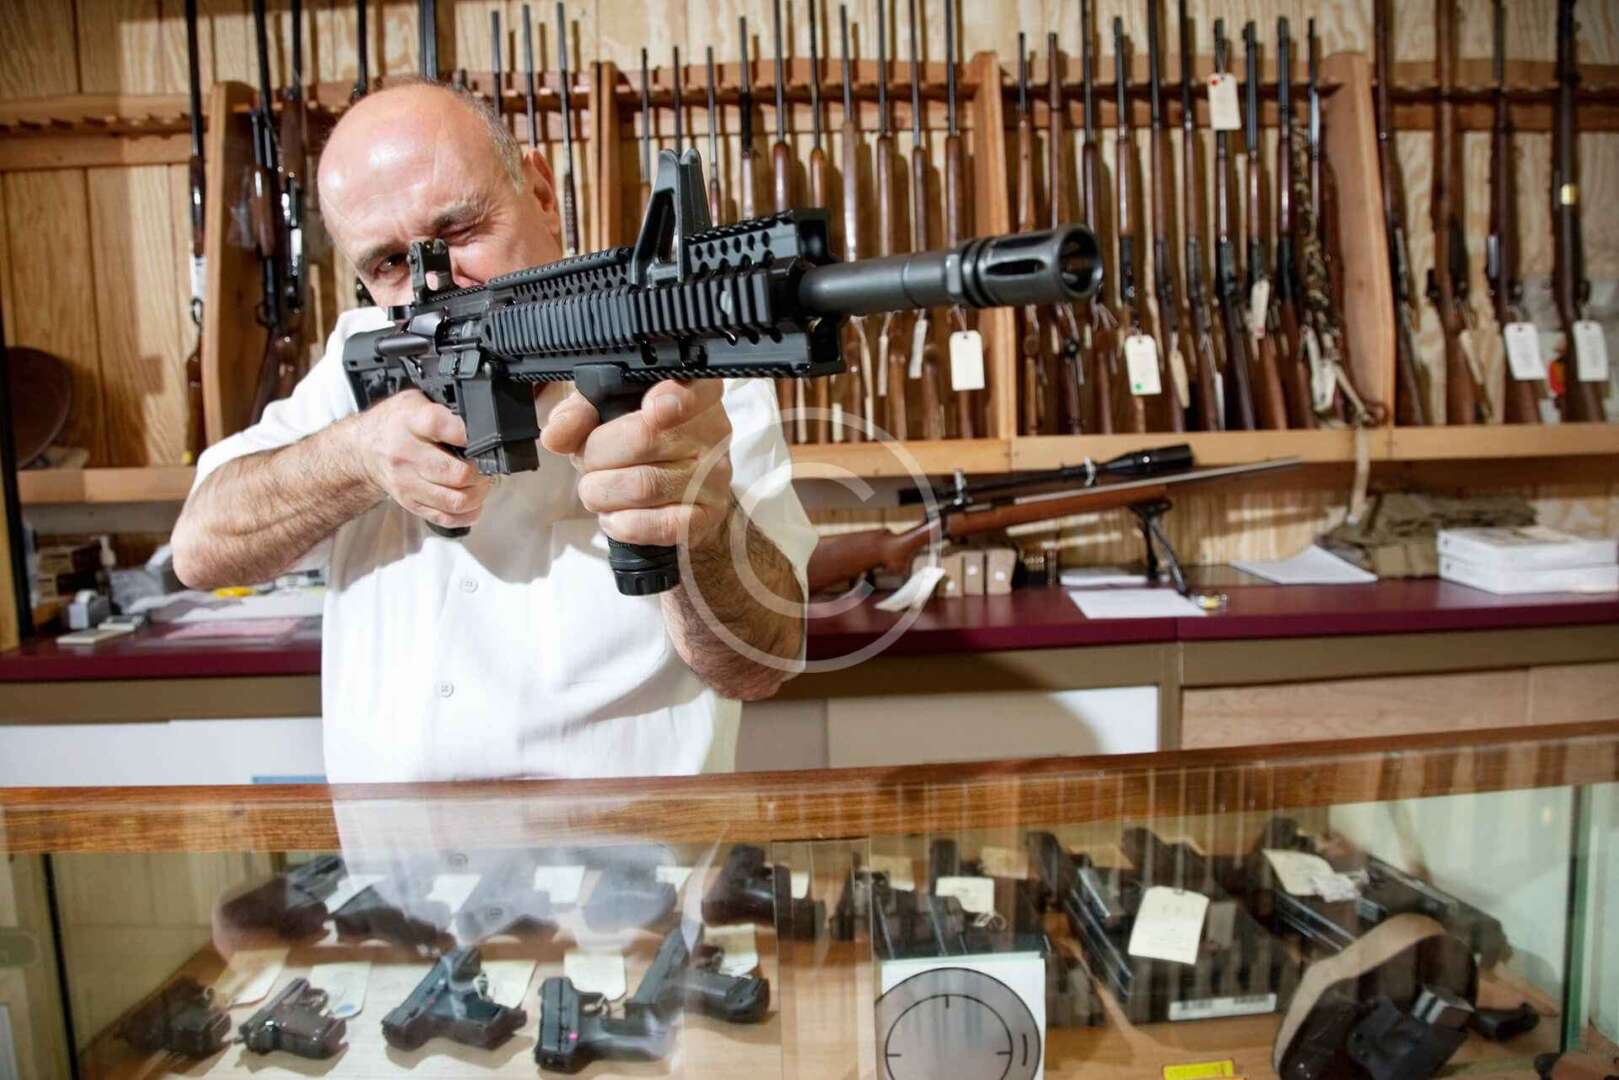 A man is holding a gun in a gun store.